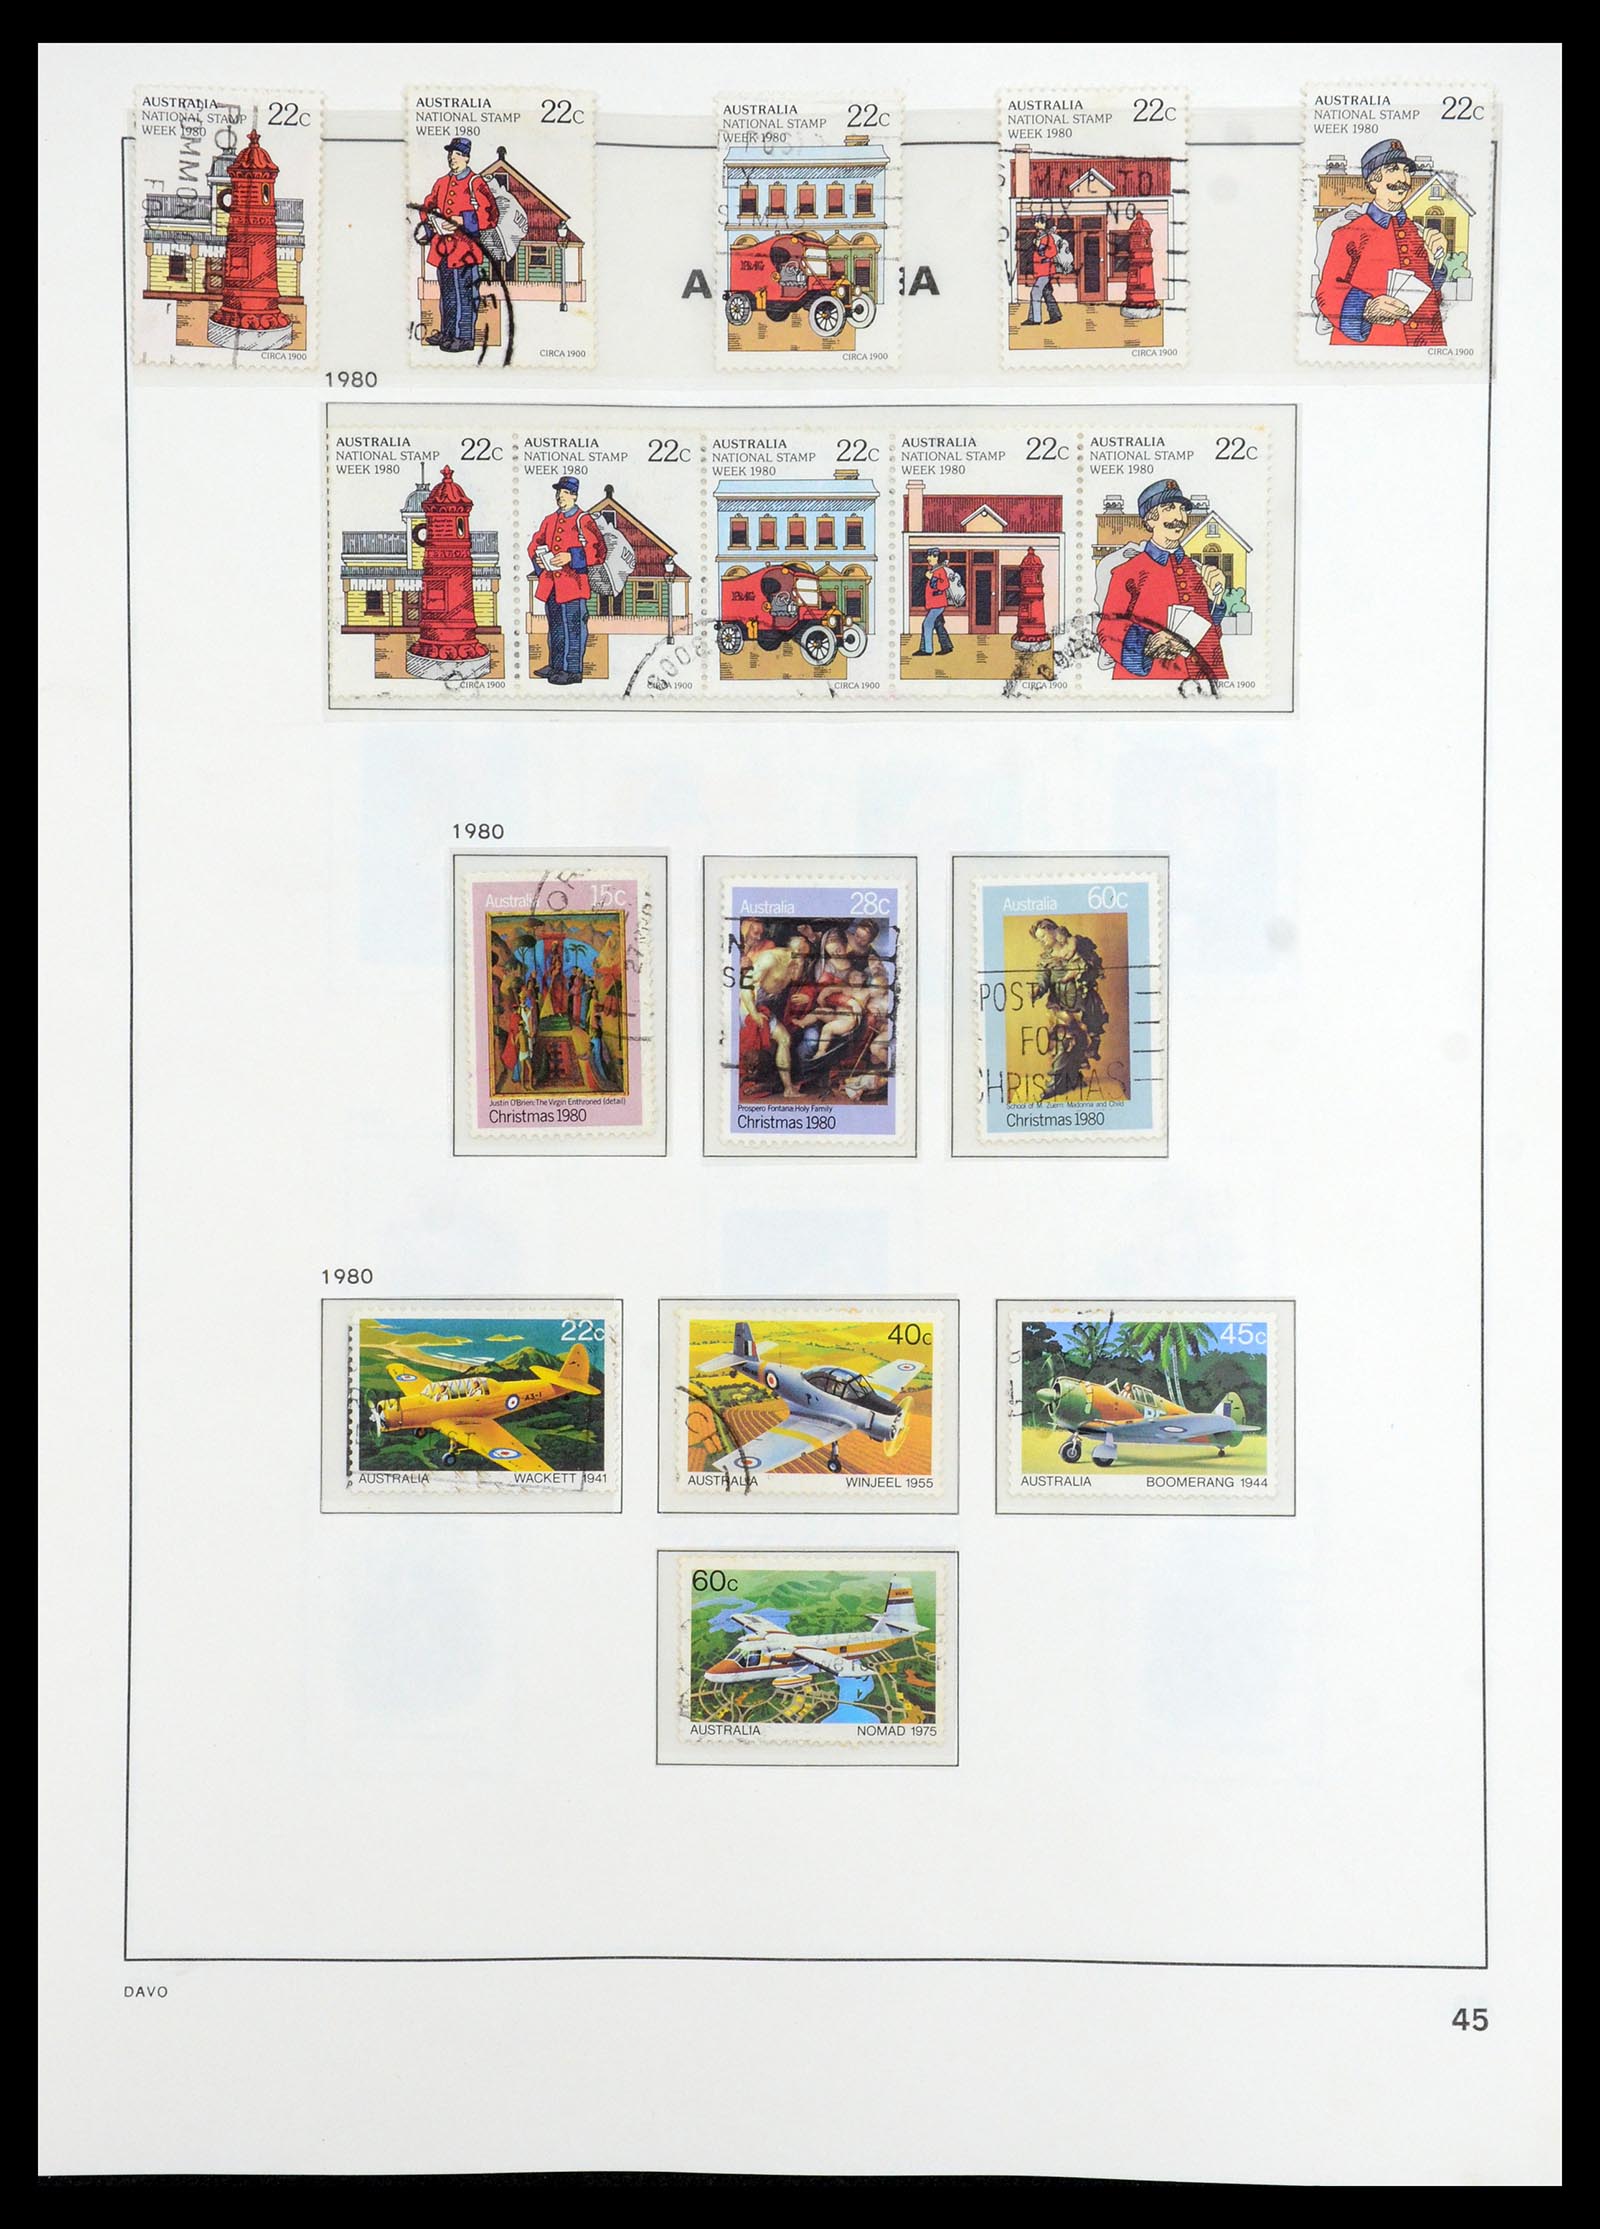 35777 057 - Stamp Collection 35777 Australian States/Australia 1860-2005.